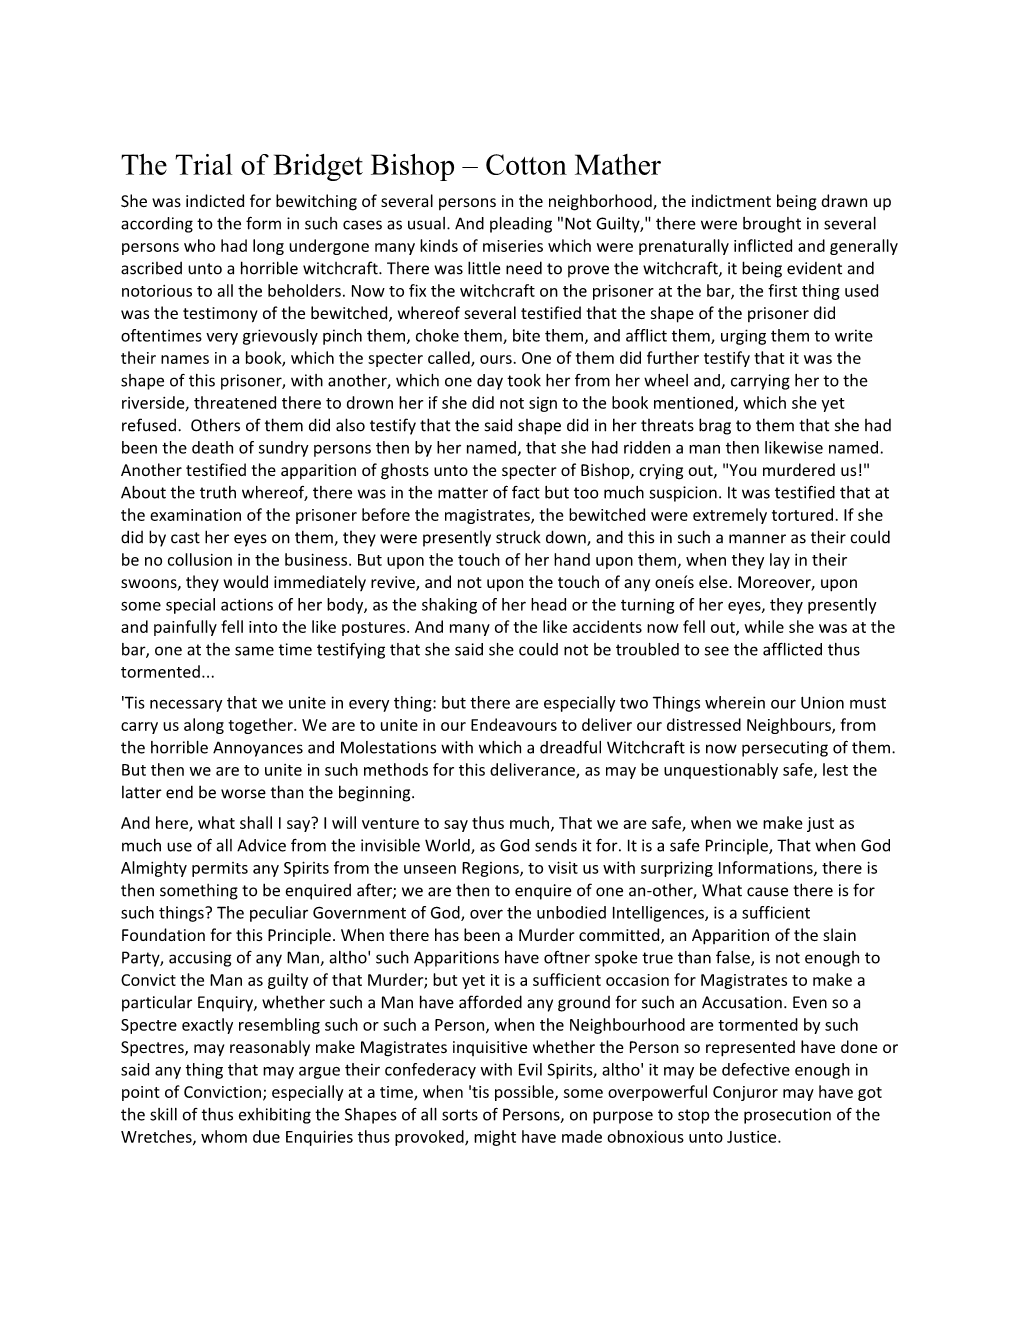 The Trial of Bridget Bishop Cotton Mather